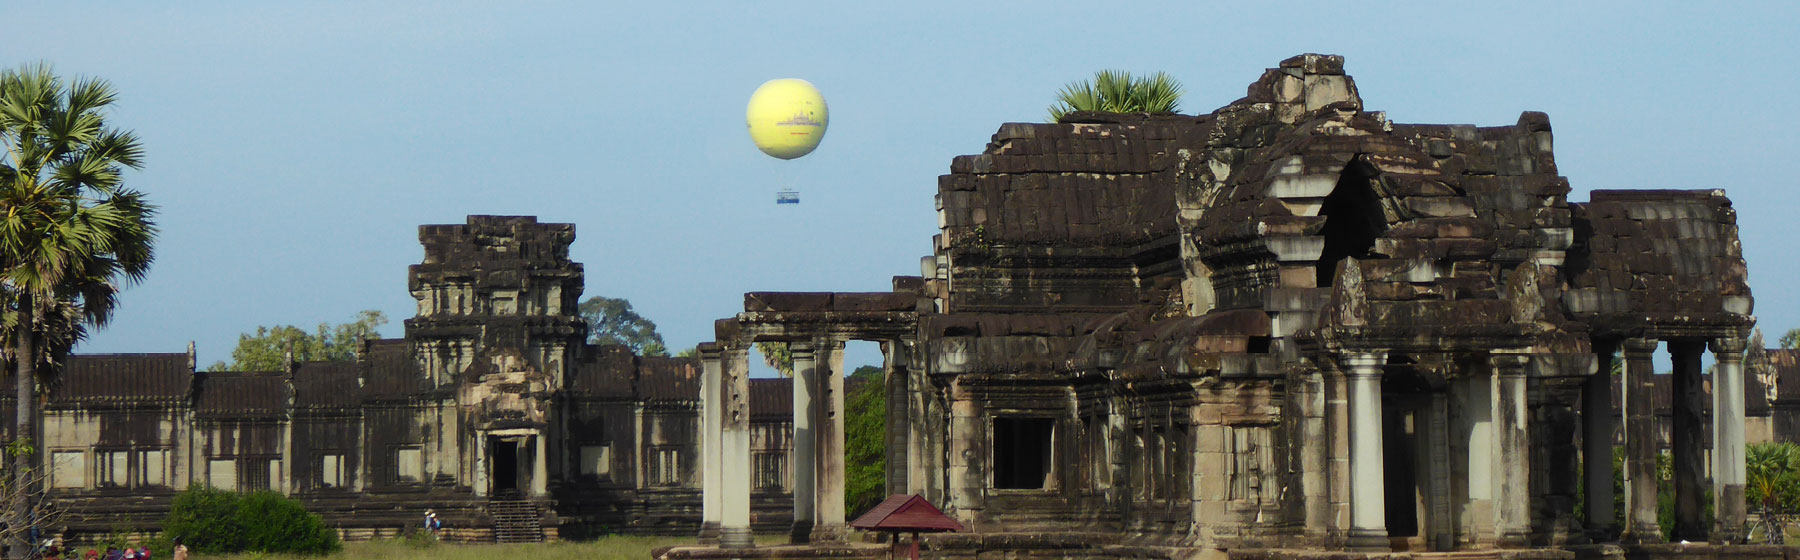 Ballone in Kambodscha